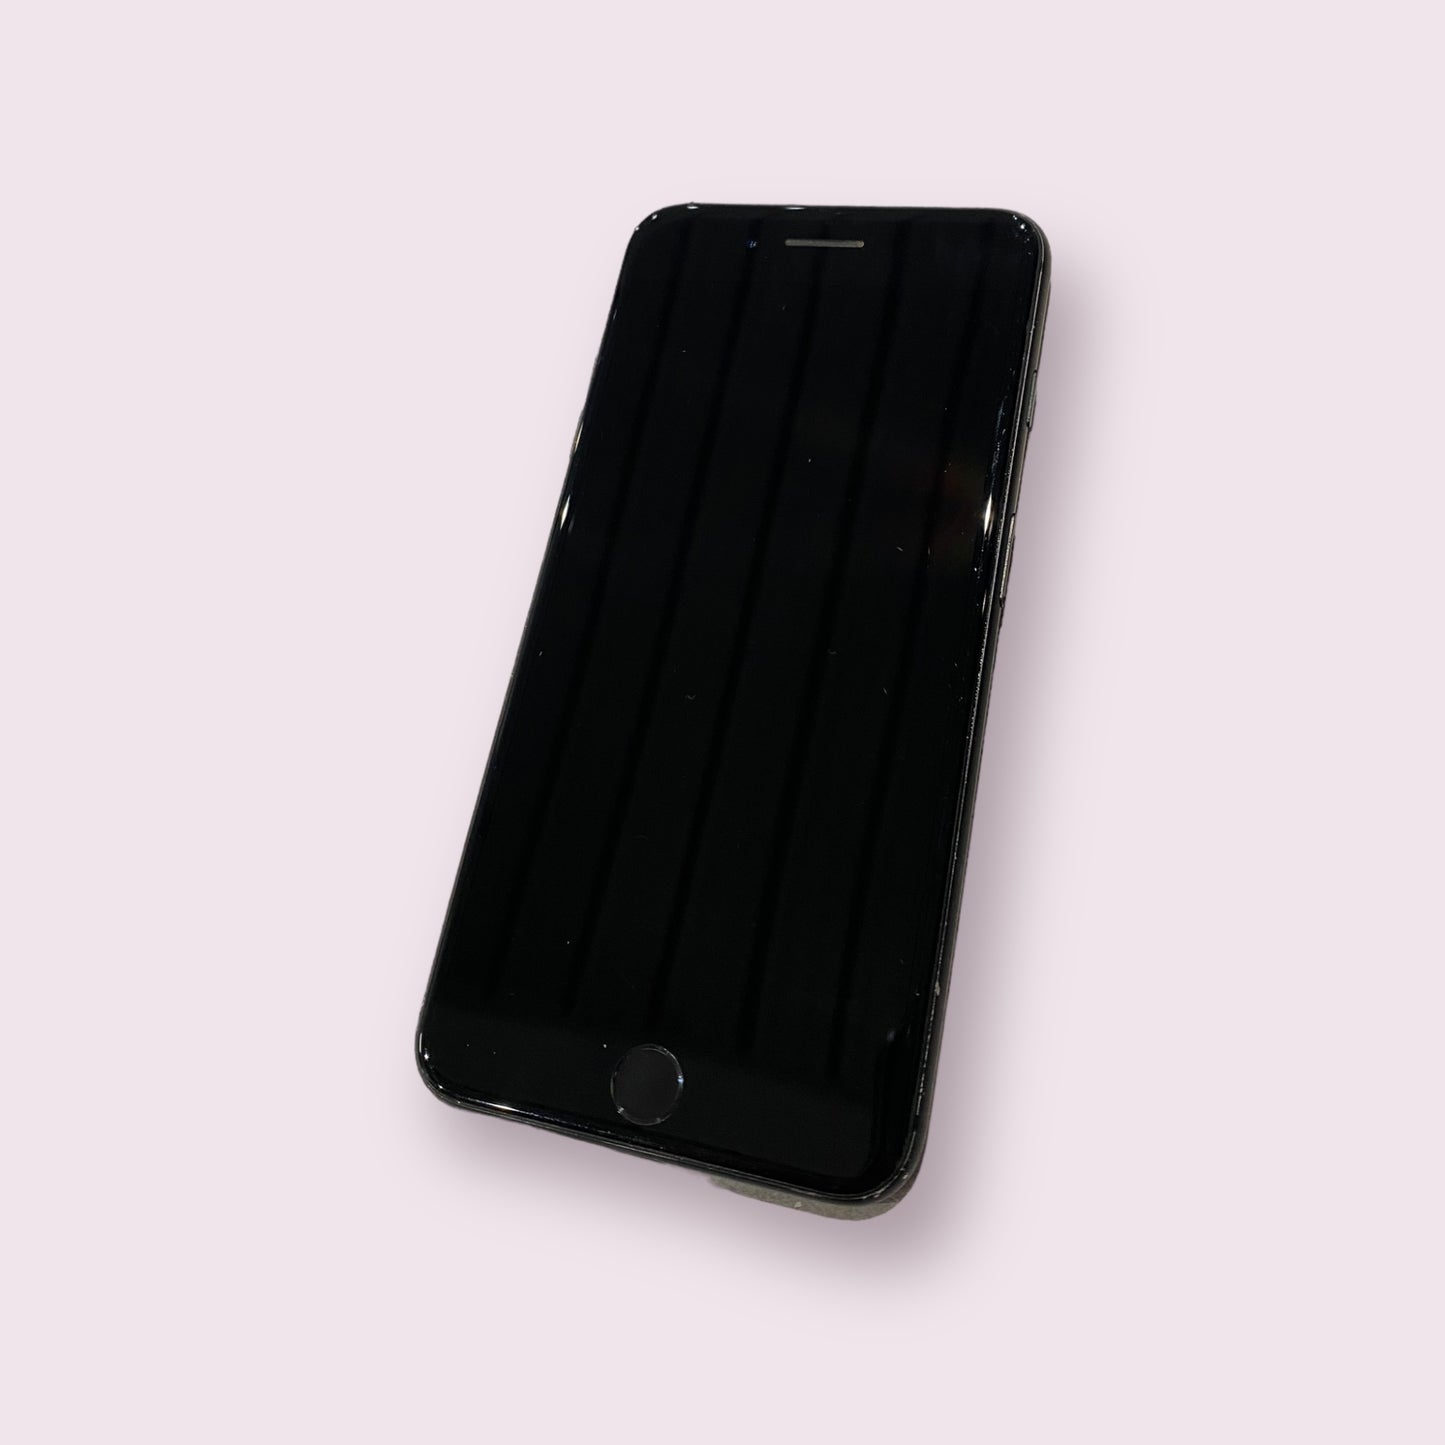 Apple iPhone 7 Plus 128GB Black Unlocked - Grade B